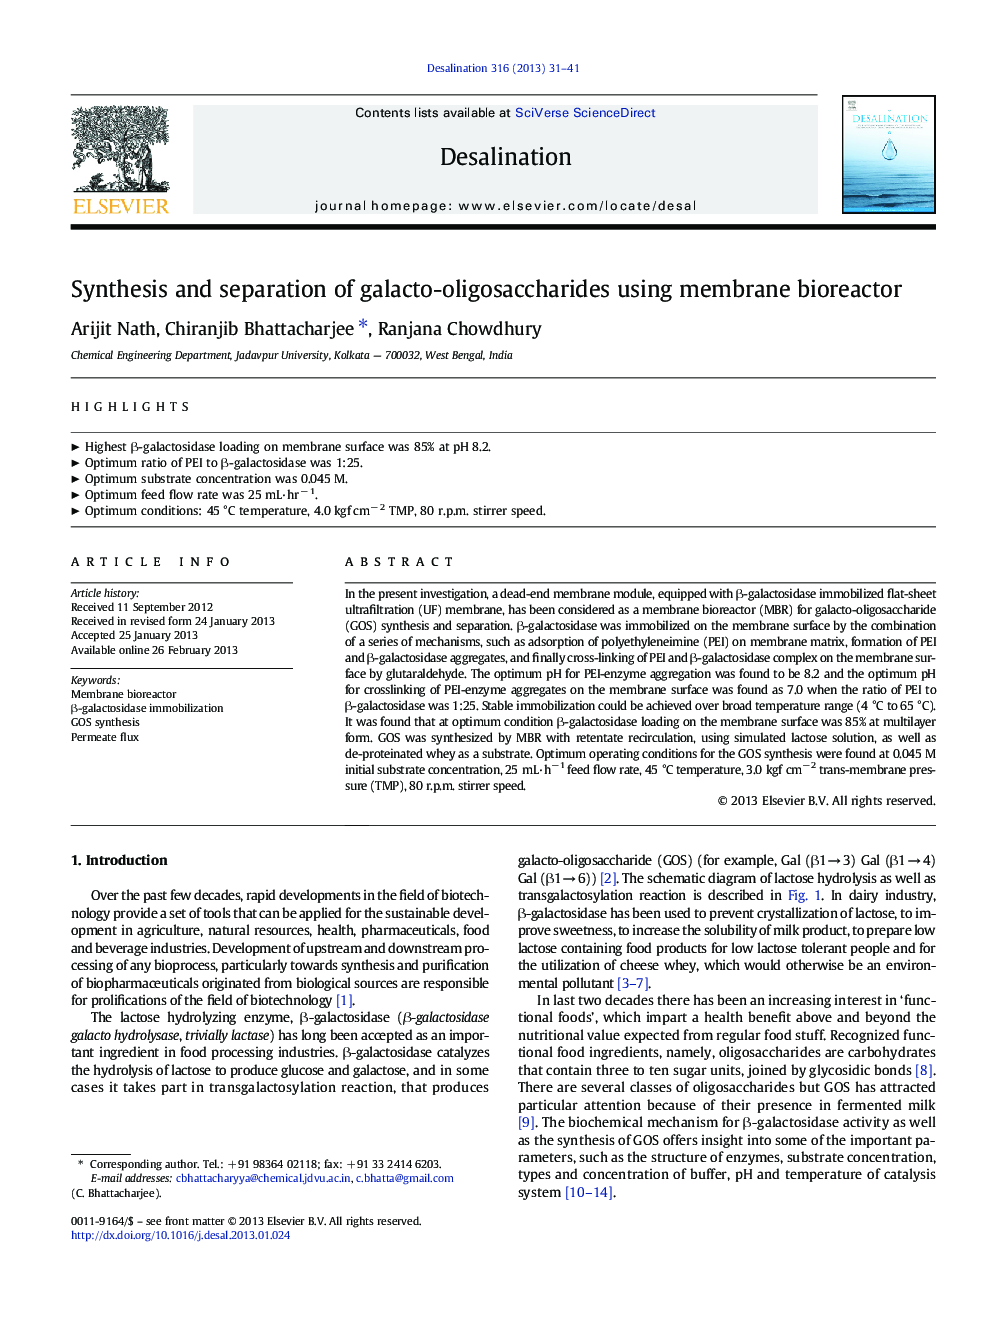 Synthesis and separation of galacto-oligosaccharides using membrane bioreactor